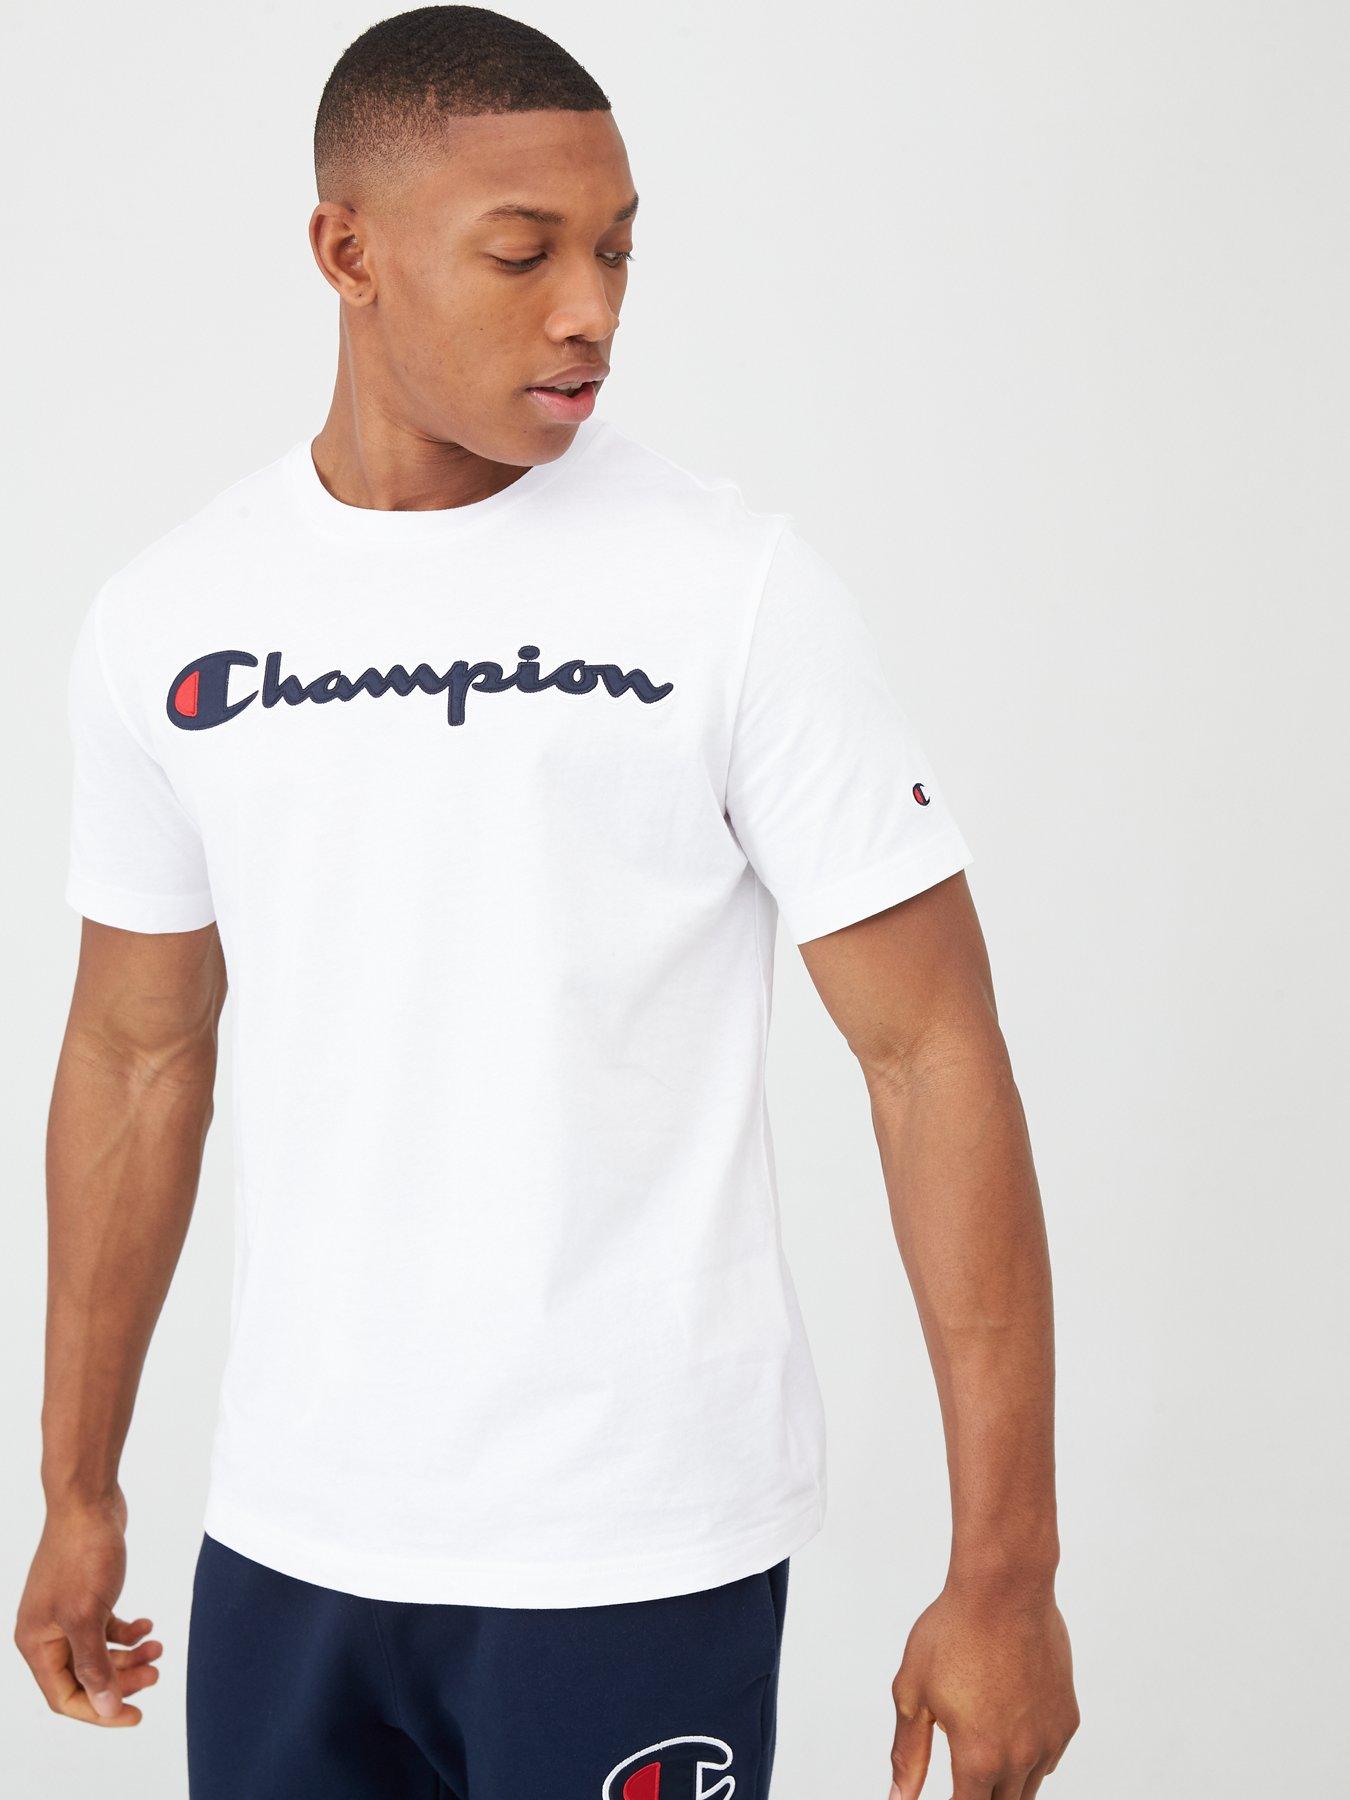 champion sportswear uk